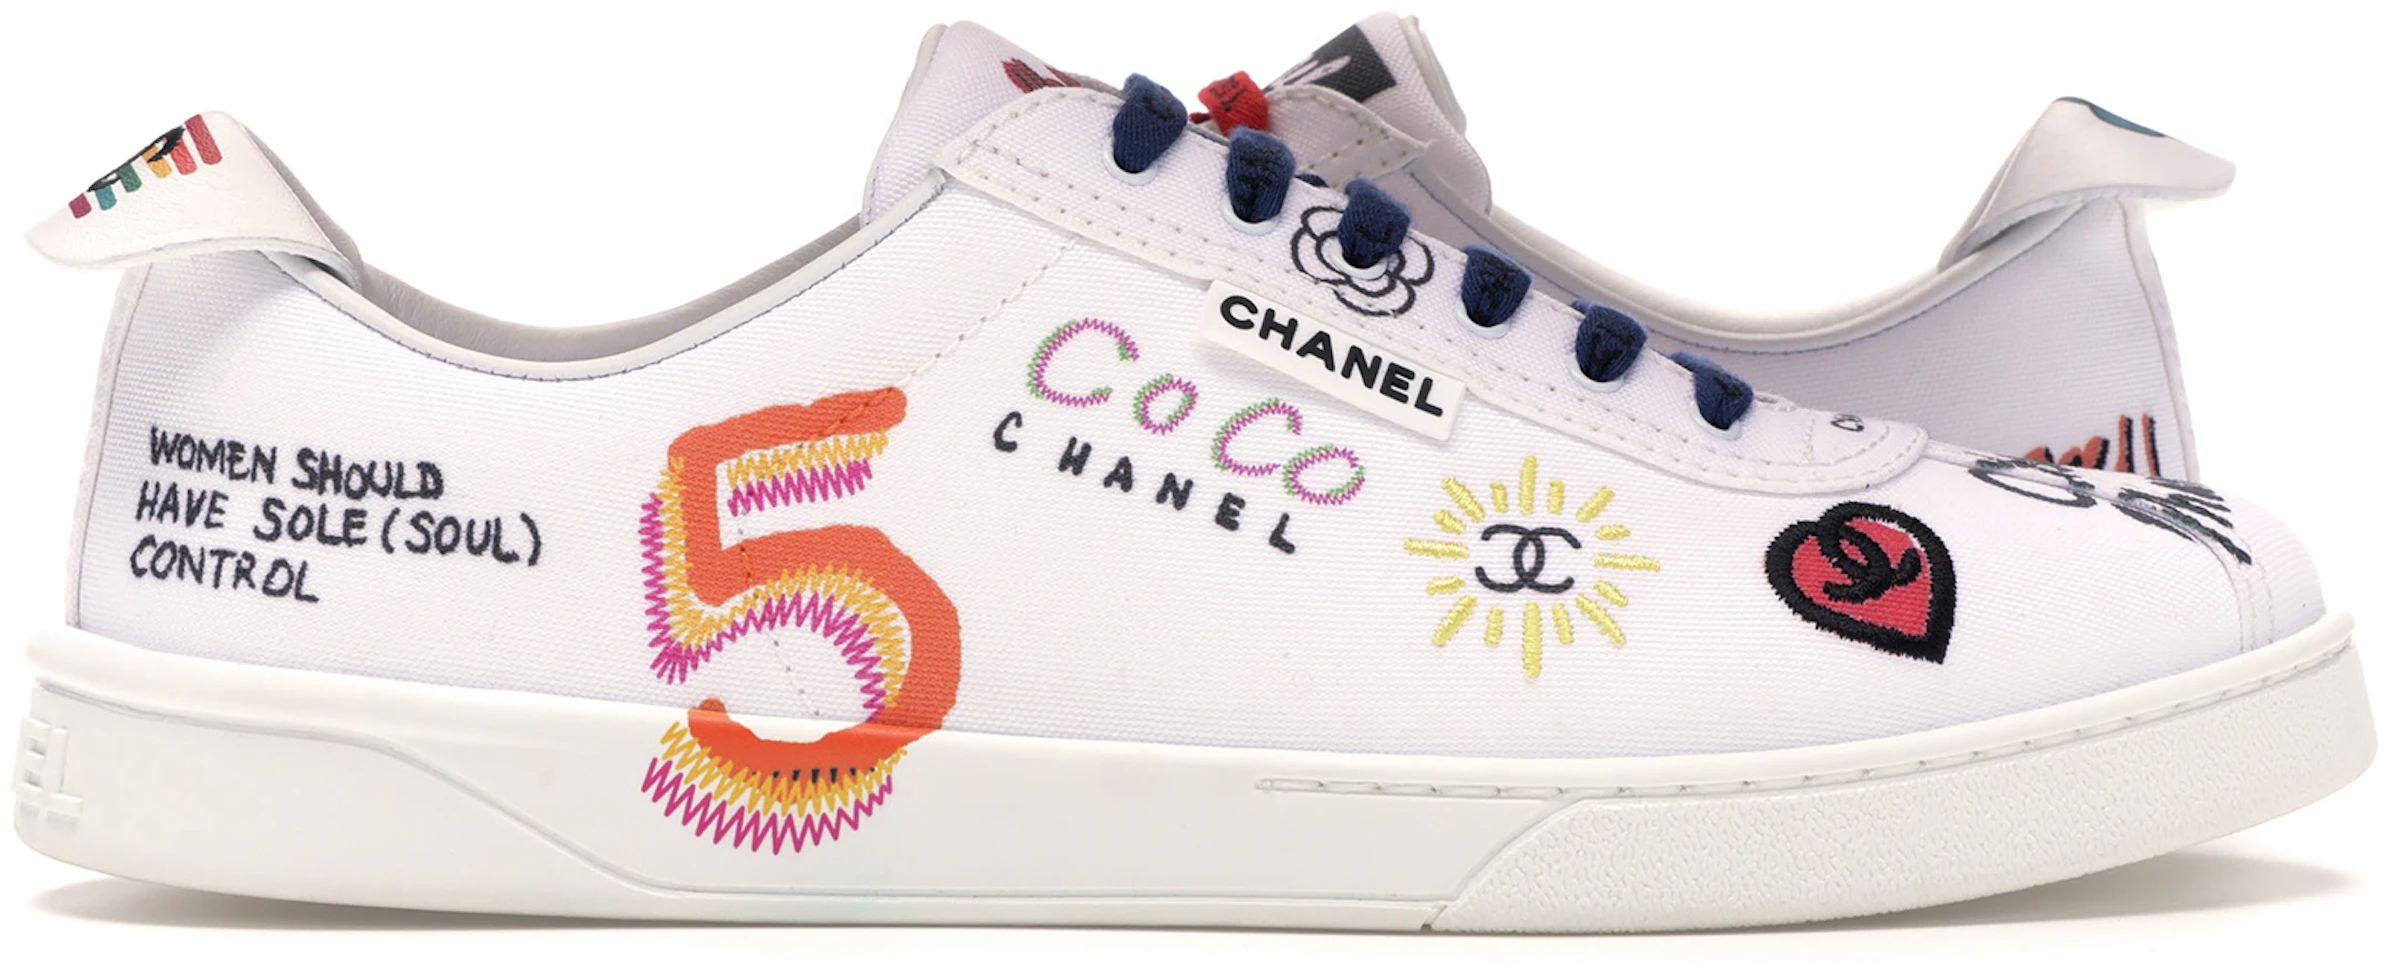 Chanel Sneakers Pharrell White Multi-Color - 19D G34878X53027 C2340 10B - US